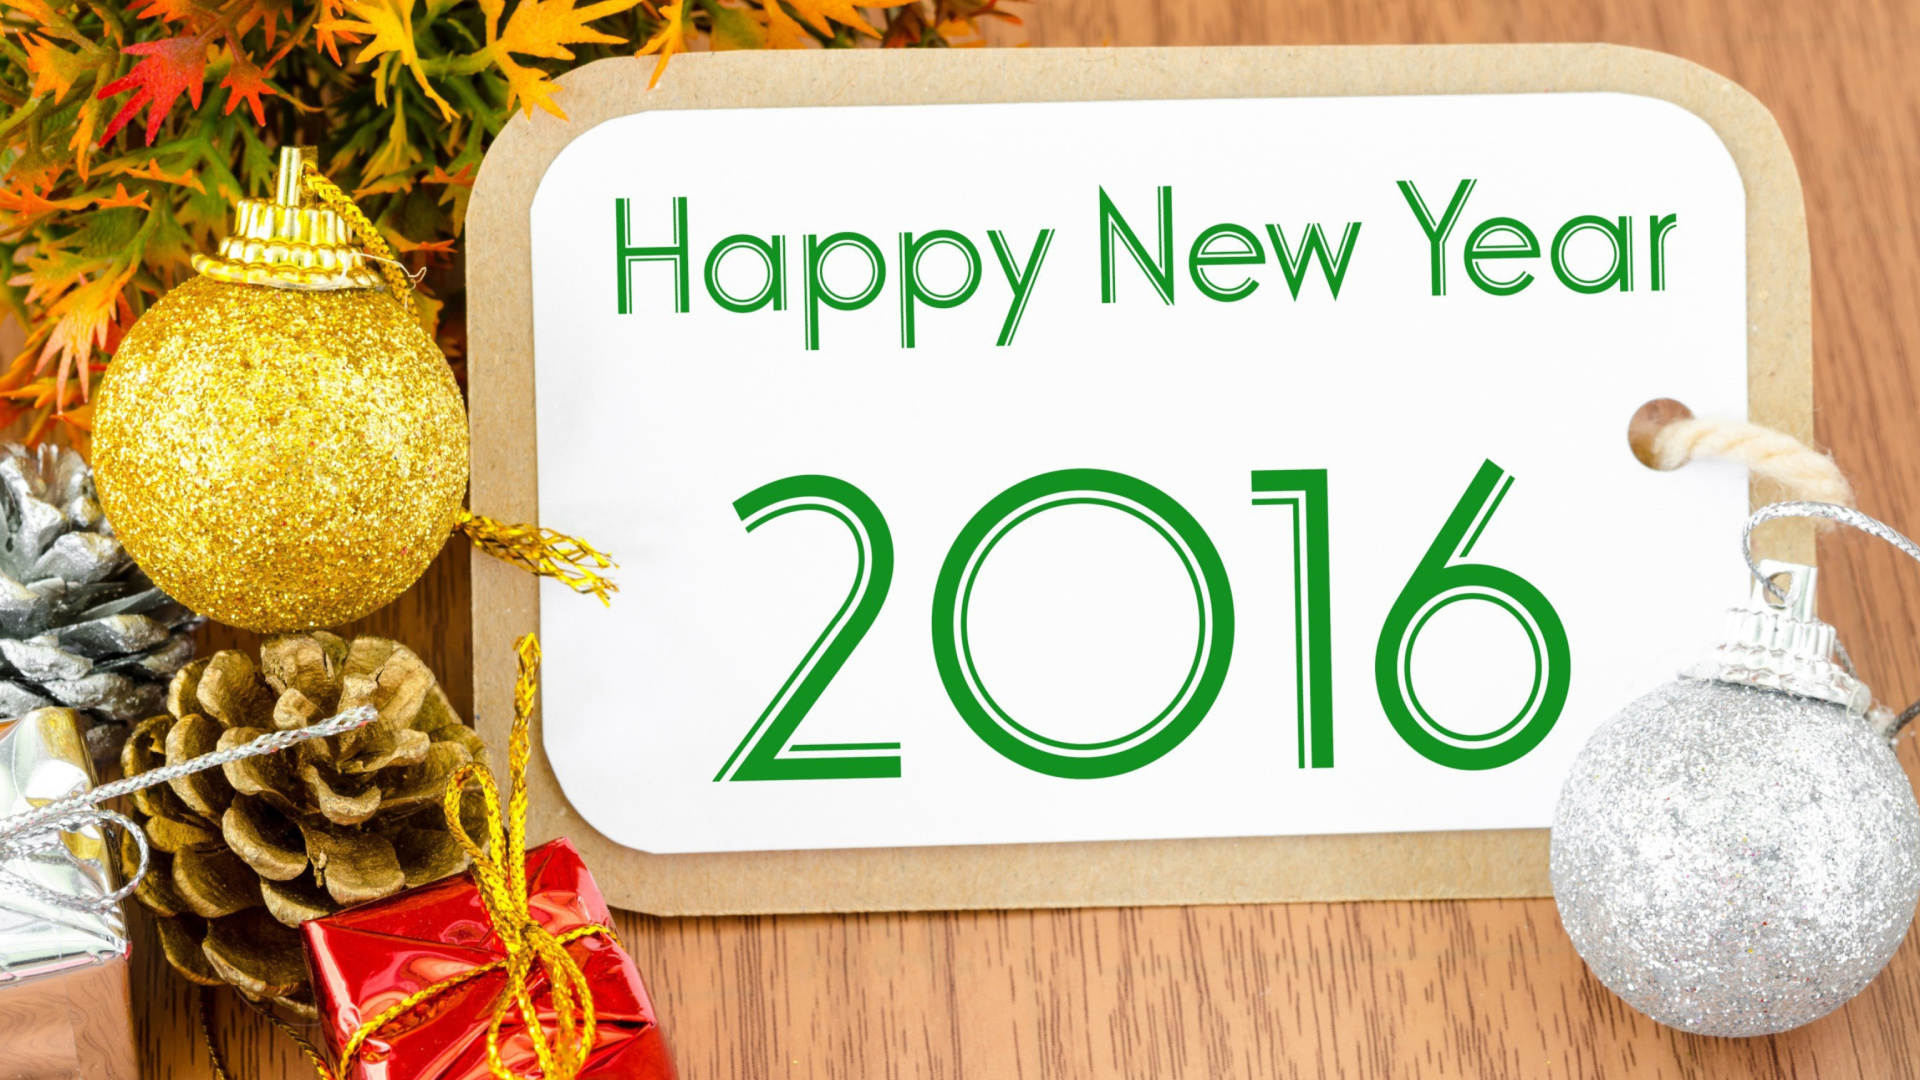 Happy New Year 2016 Card wallpaper 1920x1080